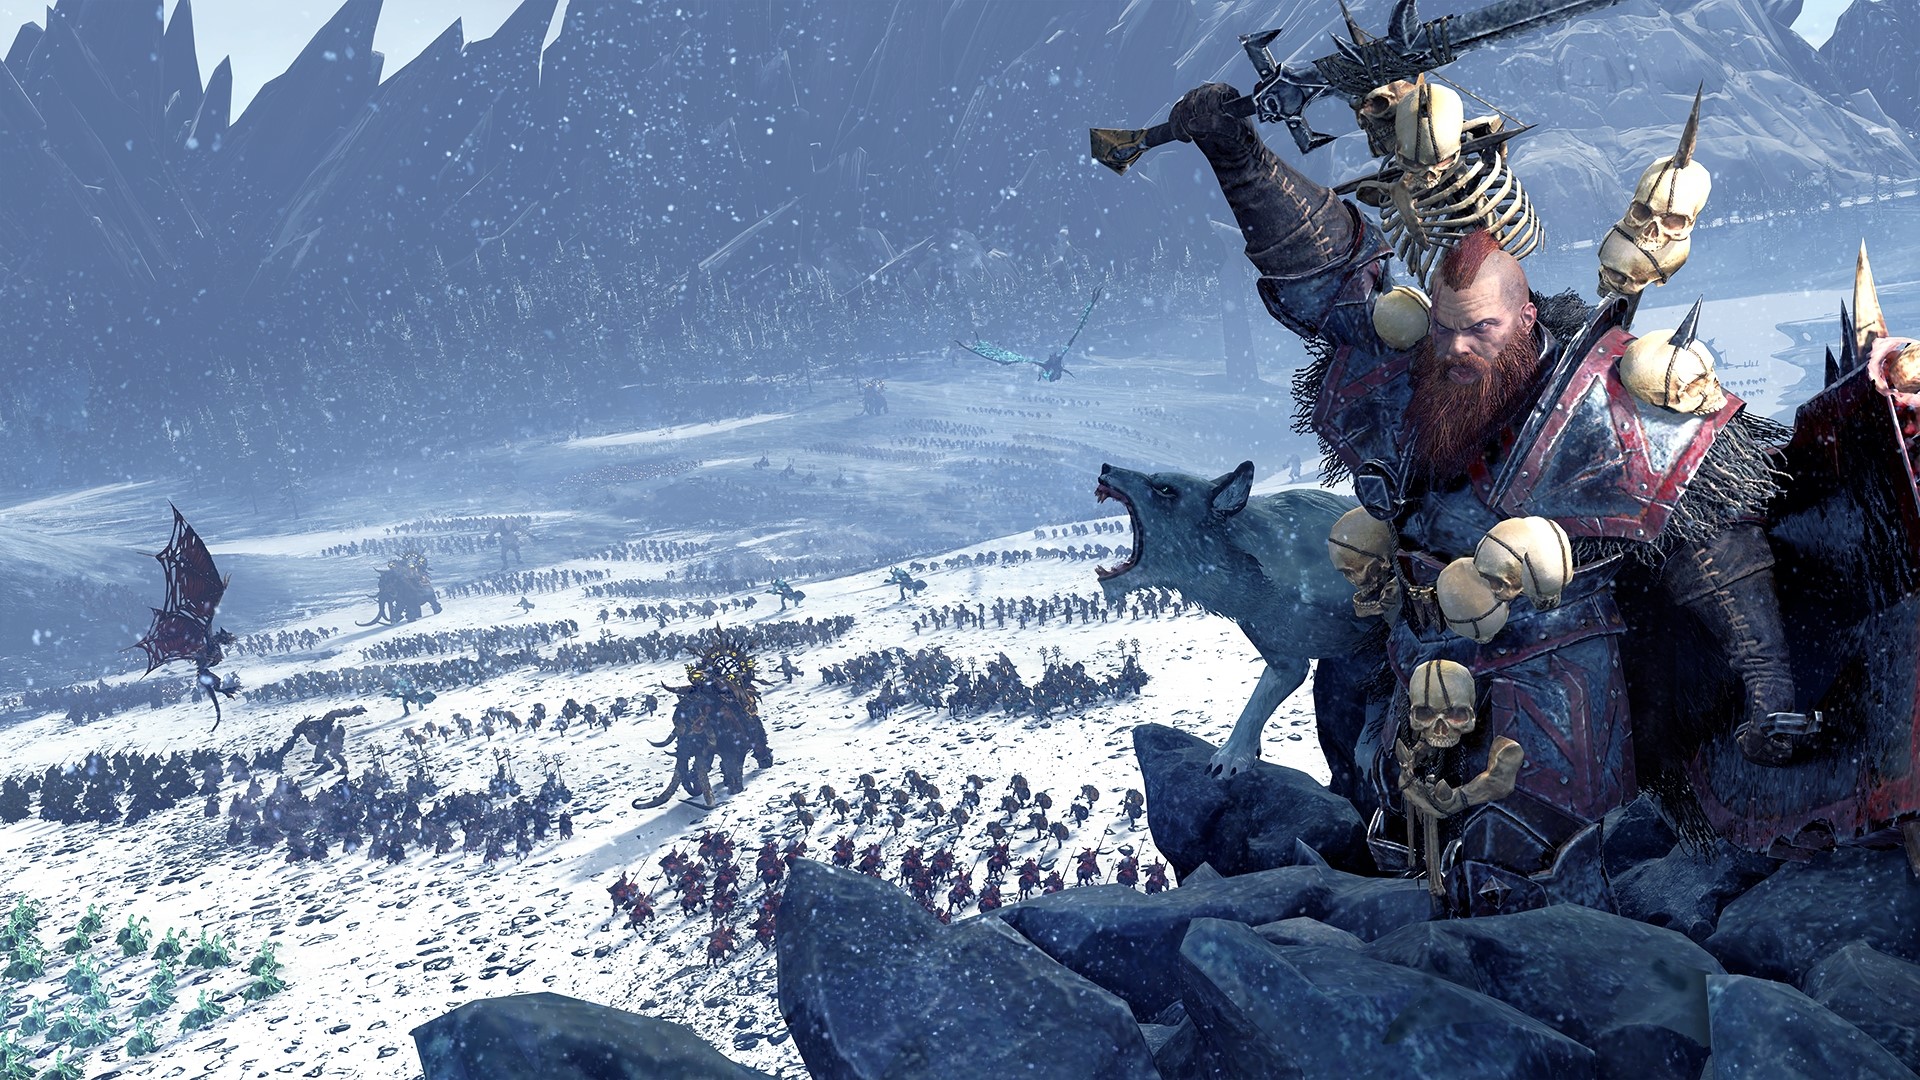 Total War Warhammer  Norsca DLC (steam key) -- RU